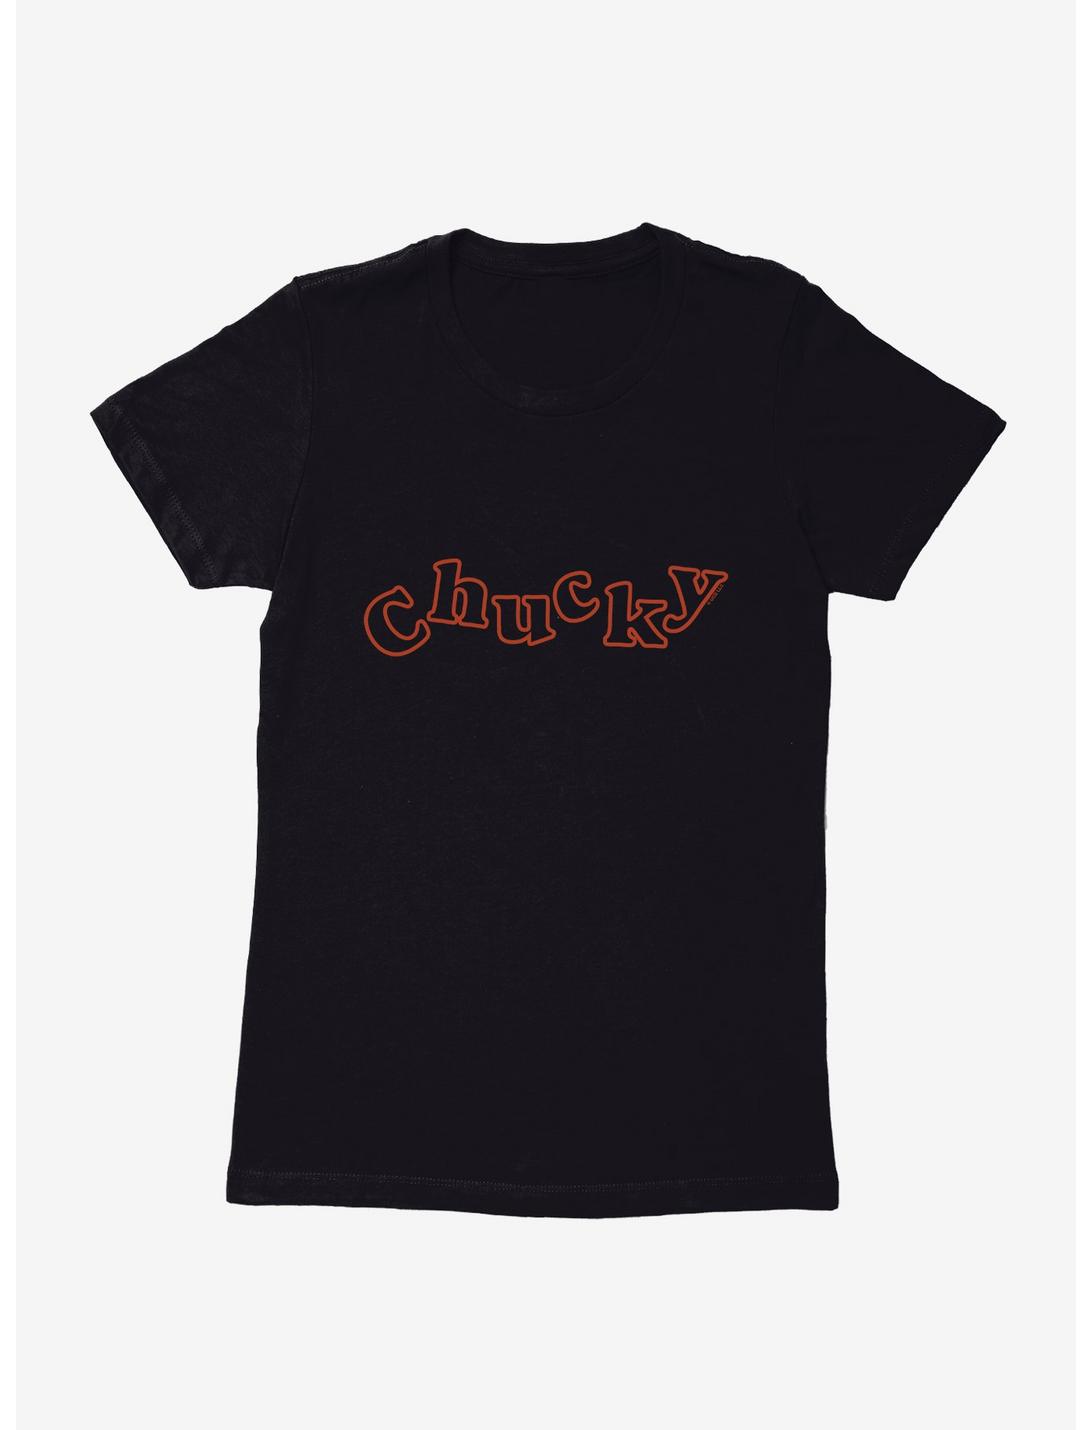 Chucky Classic Red Logo Outline Womens T-Shirt, BLACK, hi-res